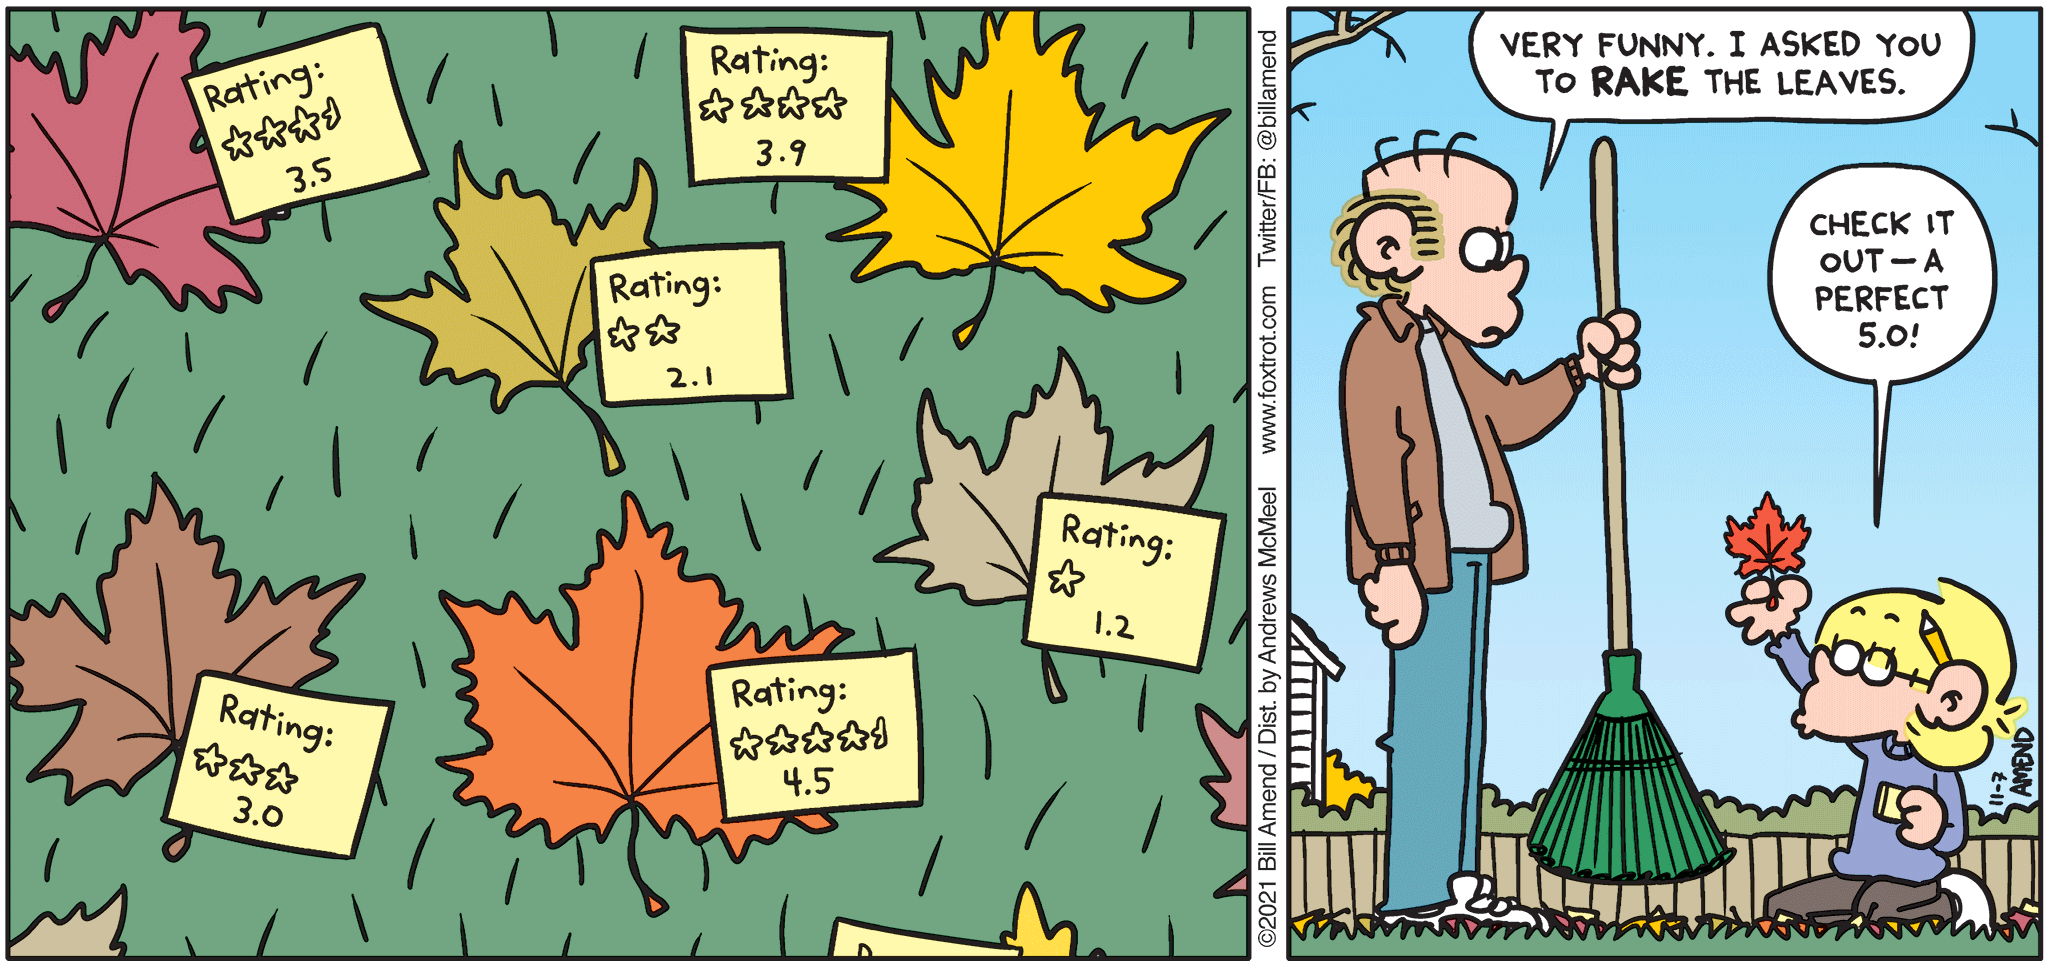 FoxTrot comic strip by Bill Amend - November 7, 2021 - Yardwork, Autumn, Leaves, Fall, Jason Fox, Roger Fox, Cartoons, Sunday Comics